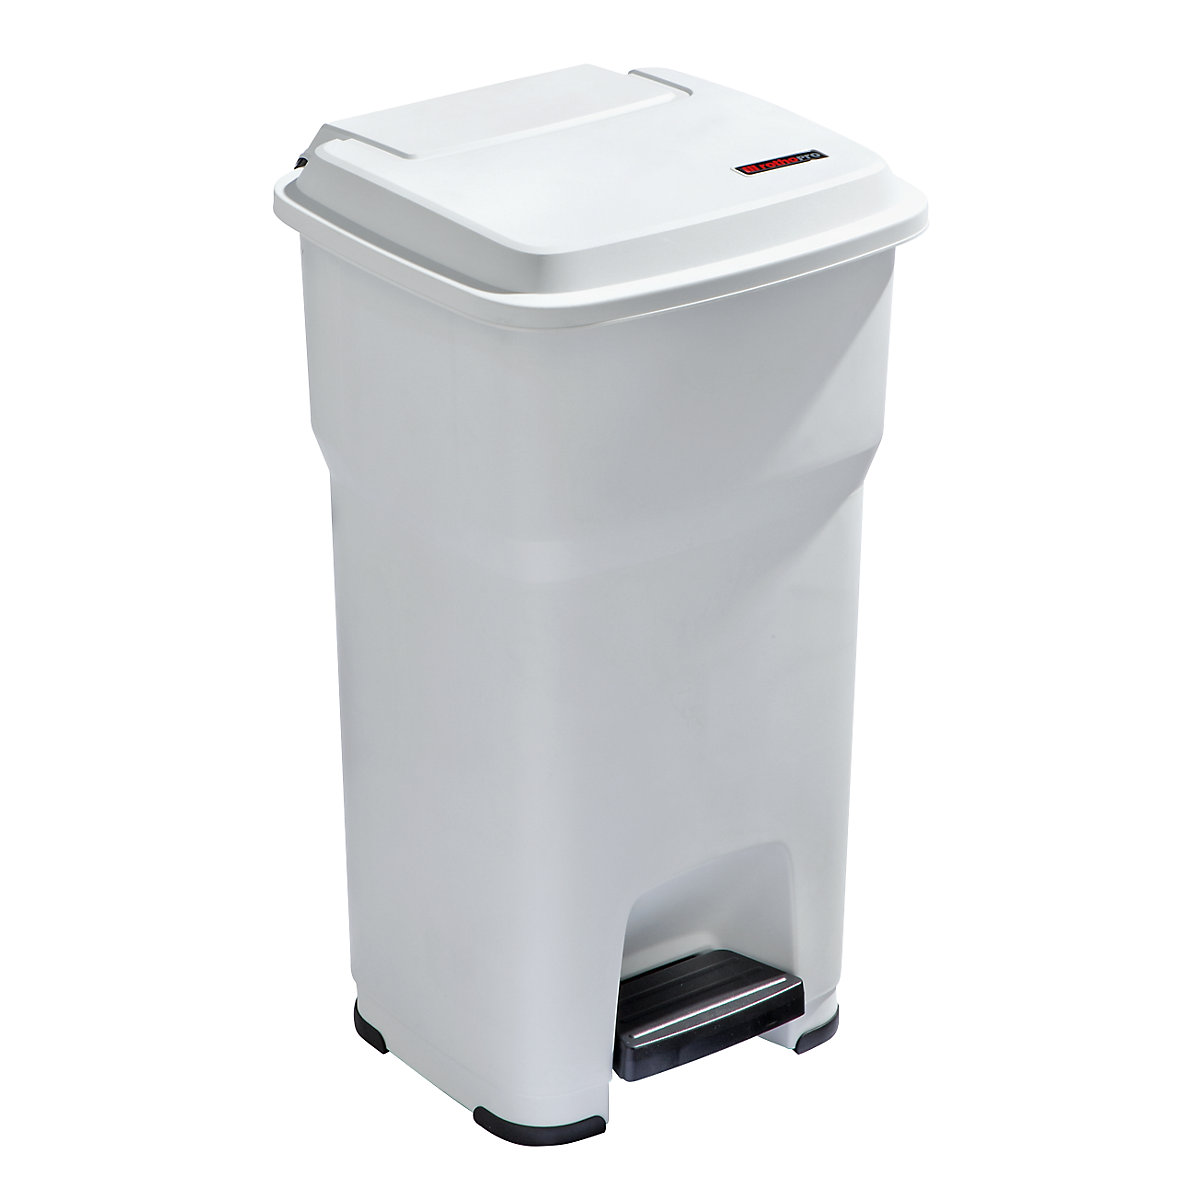 Coletor de lixo com pedal HERA – rothopro, volume 60 l, LxAxP 390 x 690 x 390 mm, branco-6